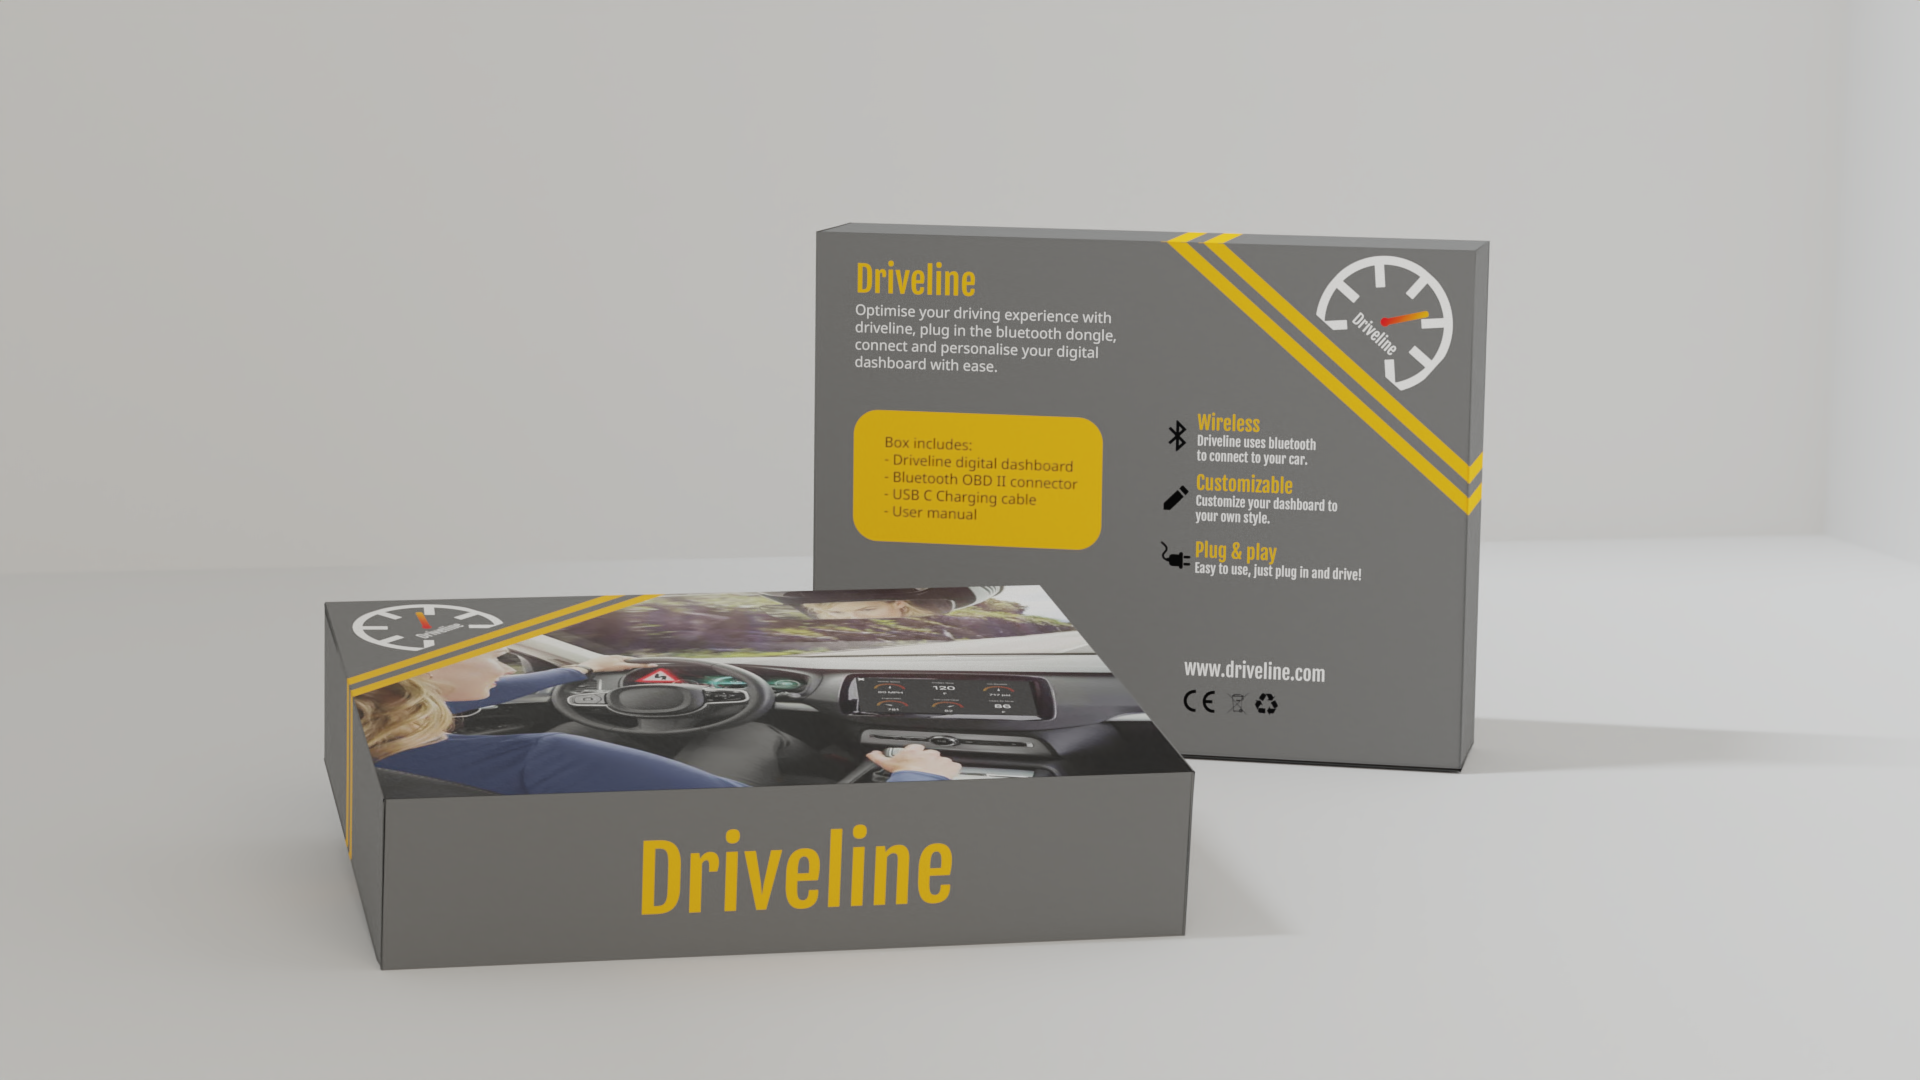 Project Driveline